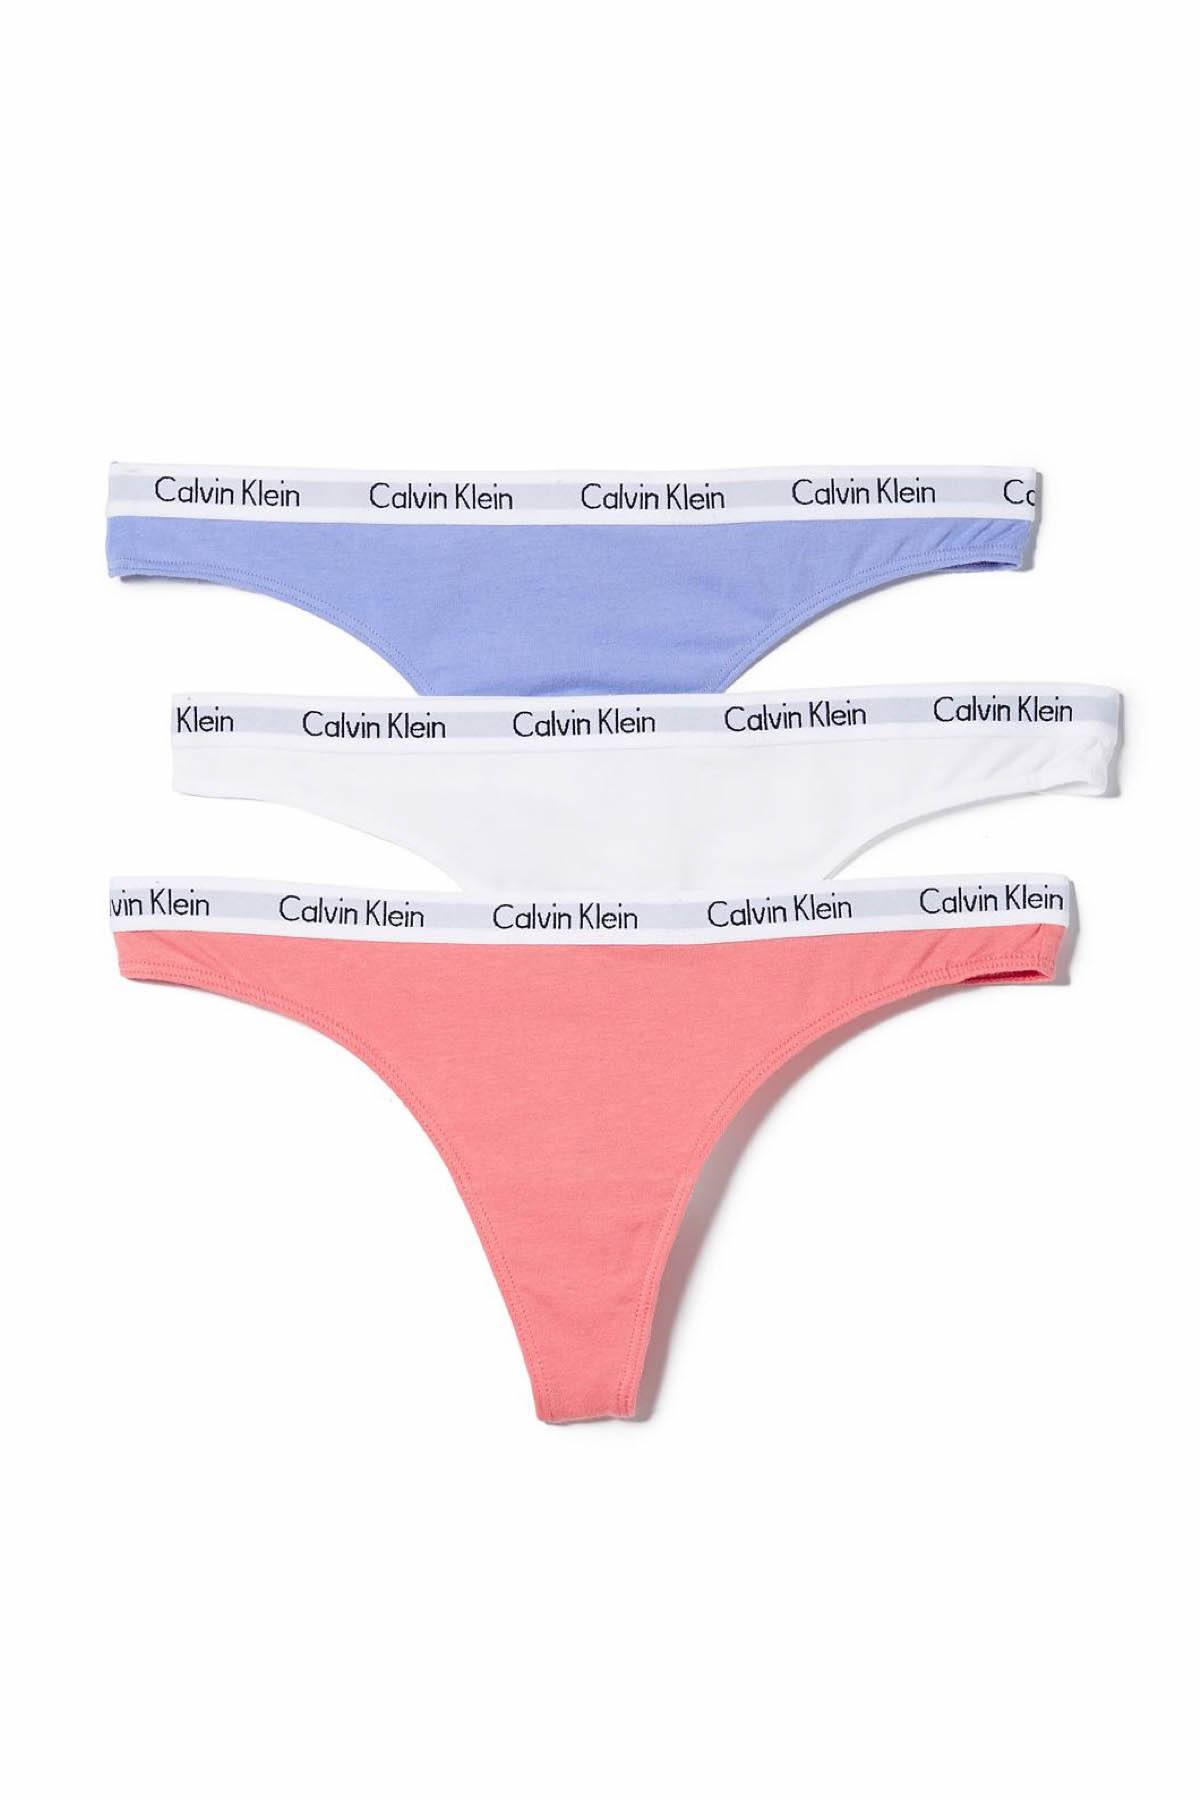 CALVIN KLEIN Carousel Cotton Thong in Pastel Lilac